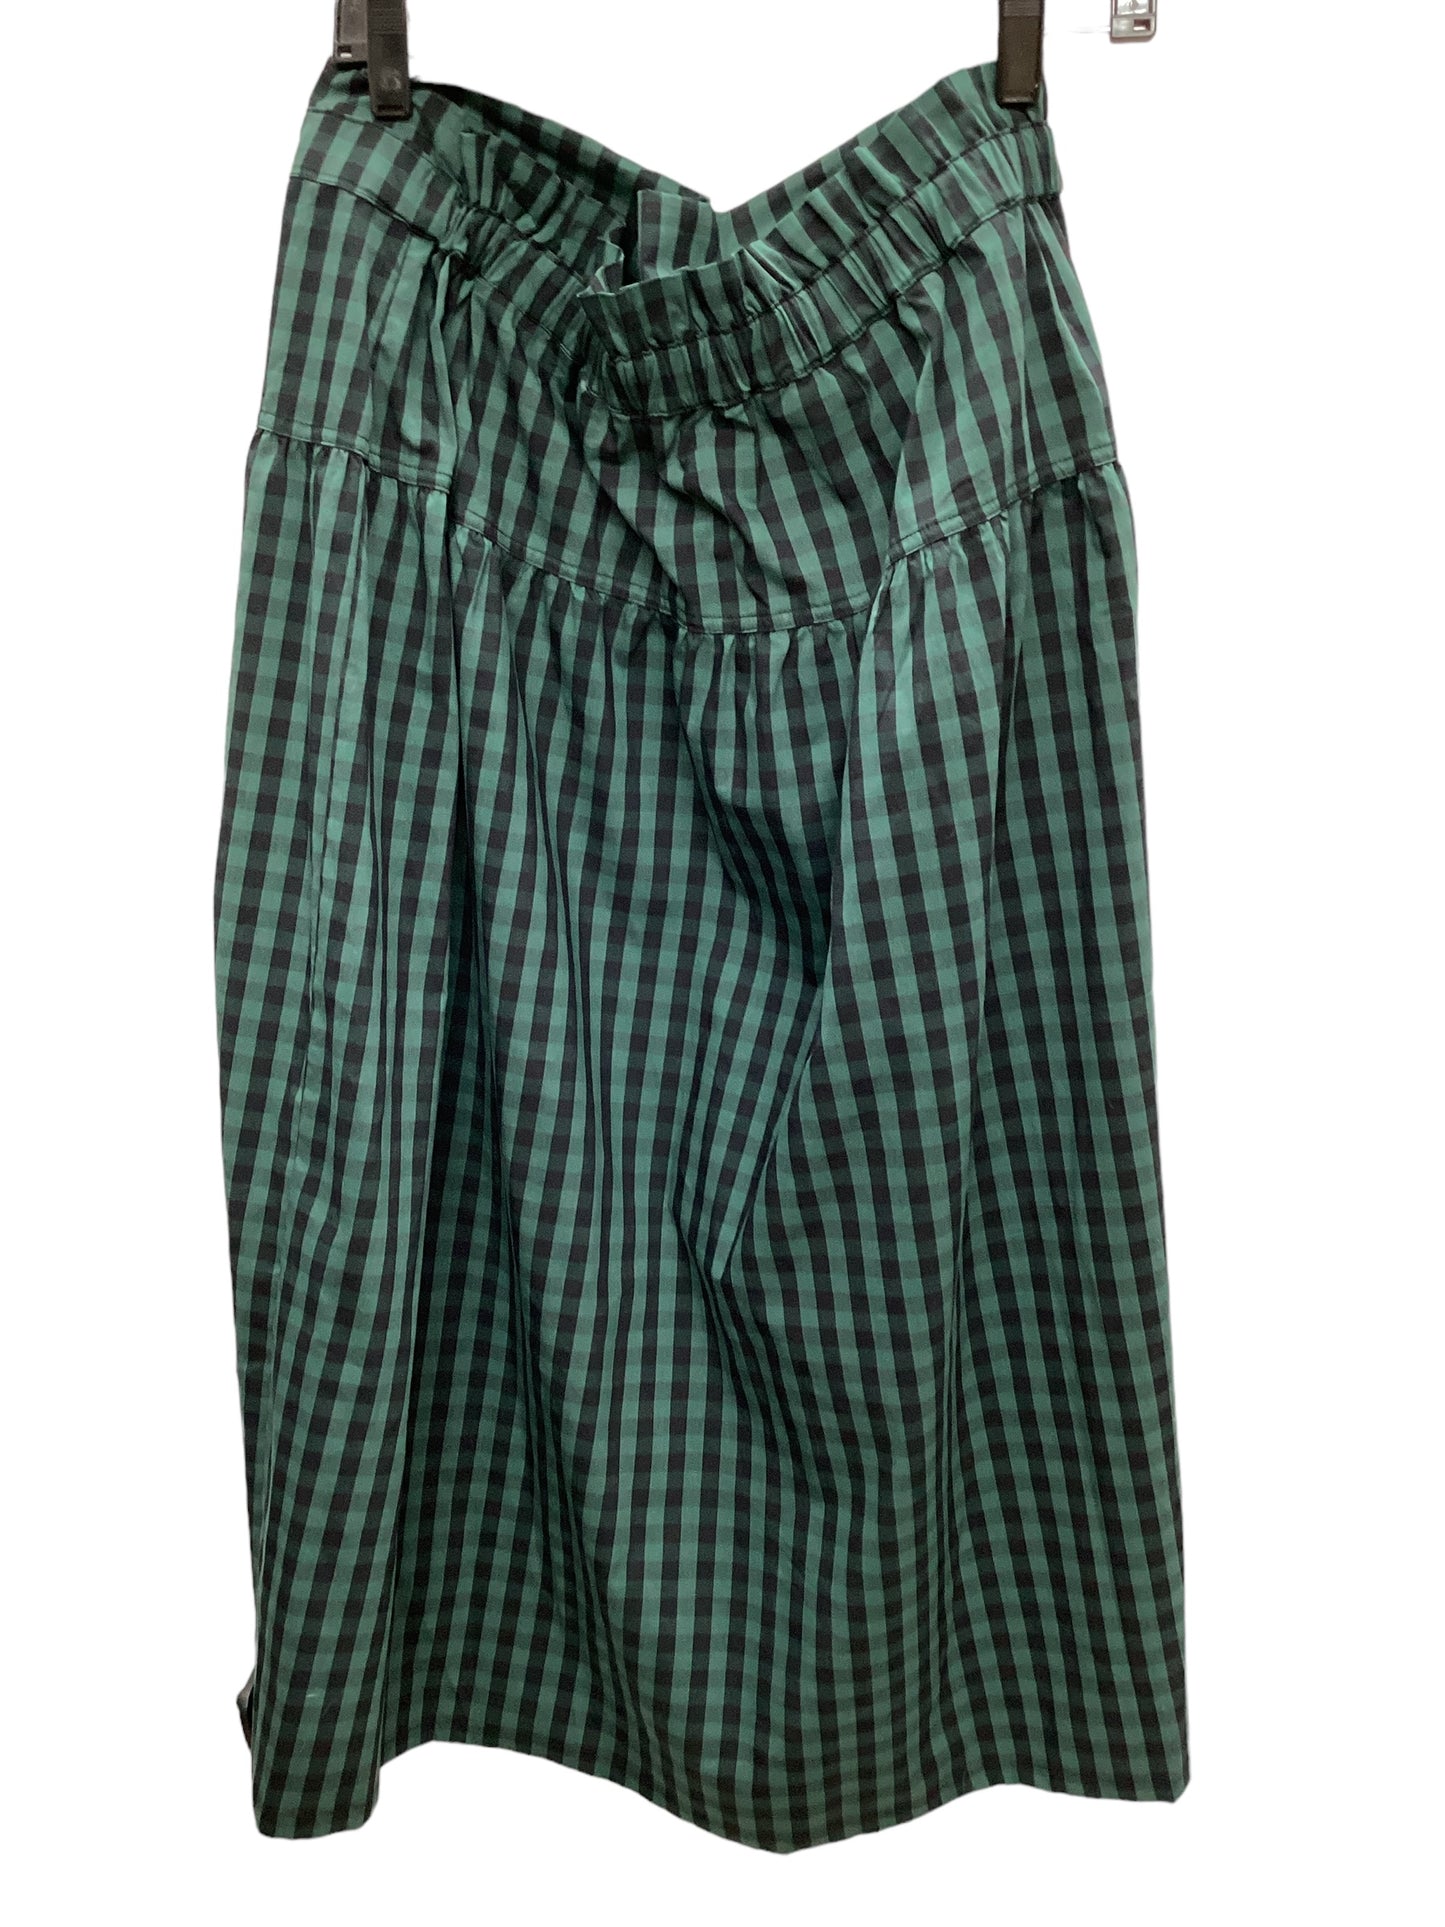 Skirt Midi By Draper James  Size: Xxl